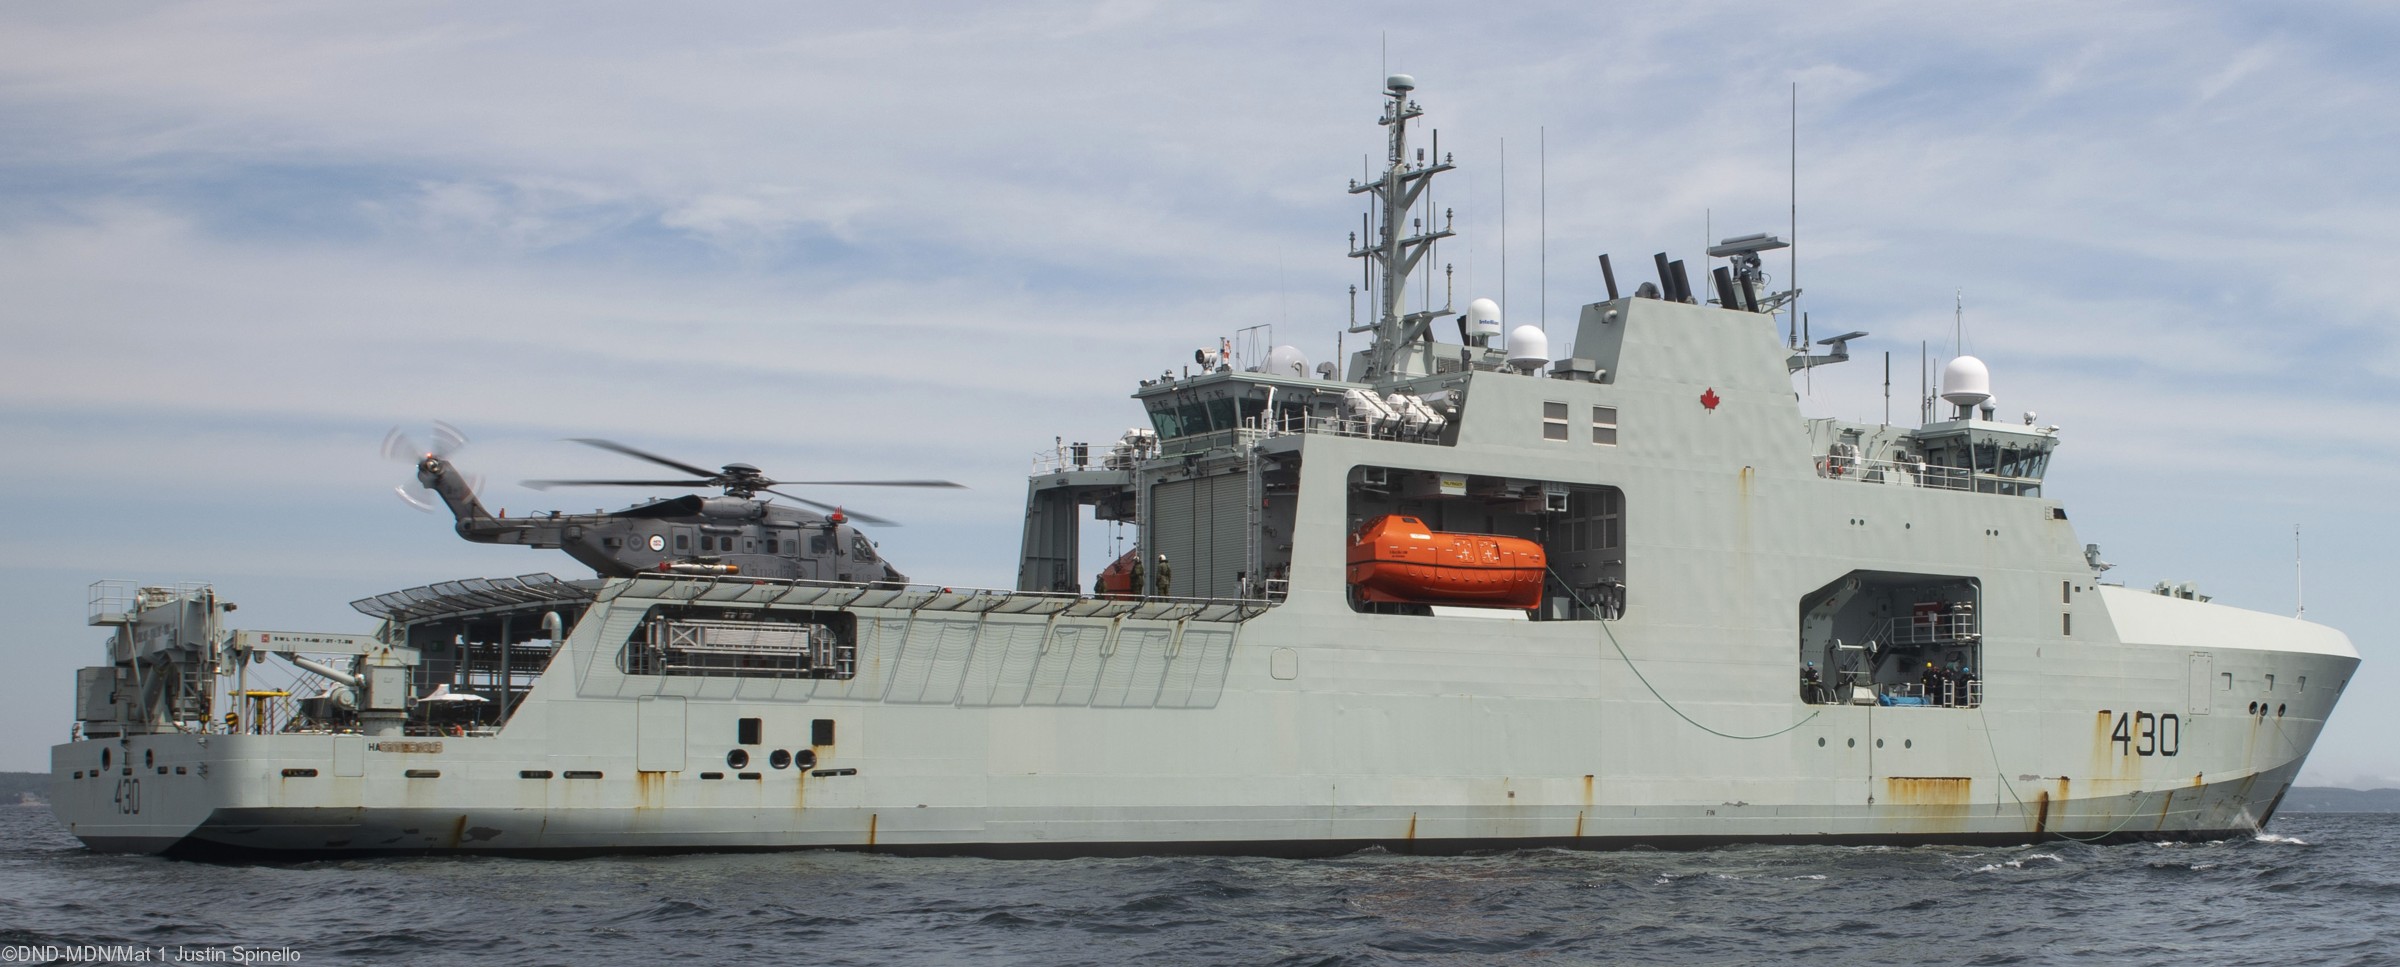 aopv-430 hmcs harry dewolf arctic offshore patrol vessel ncsm royal canadian navy 04